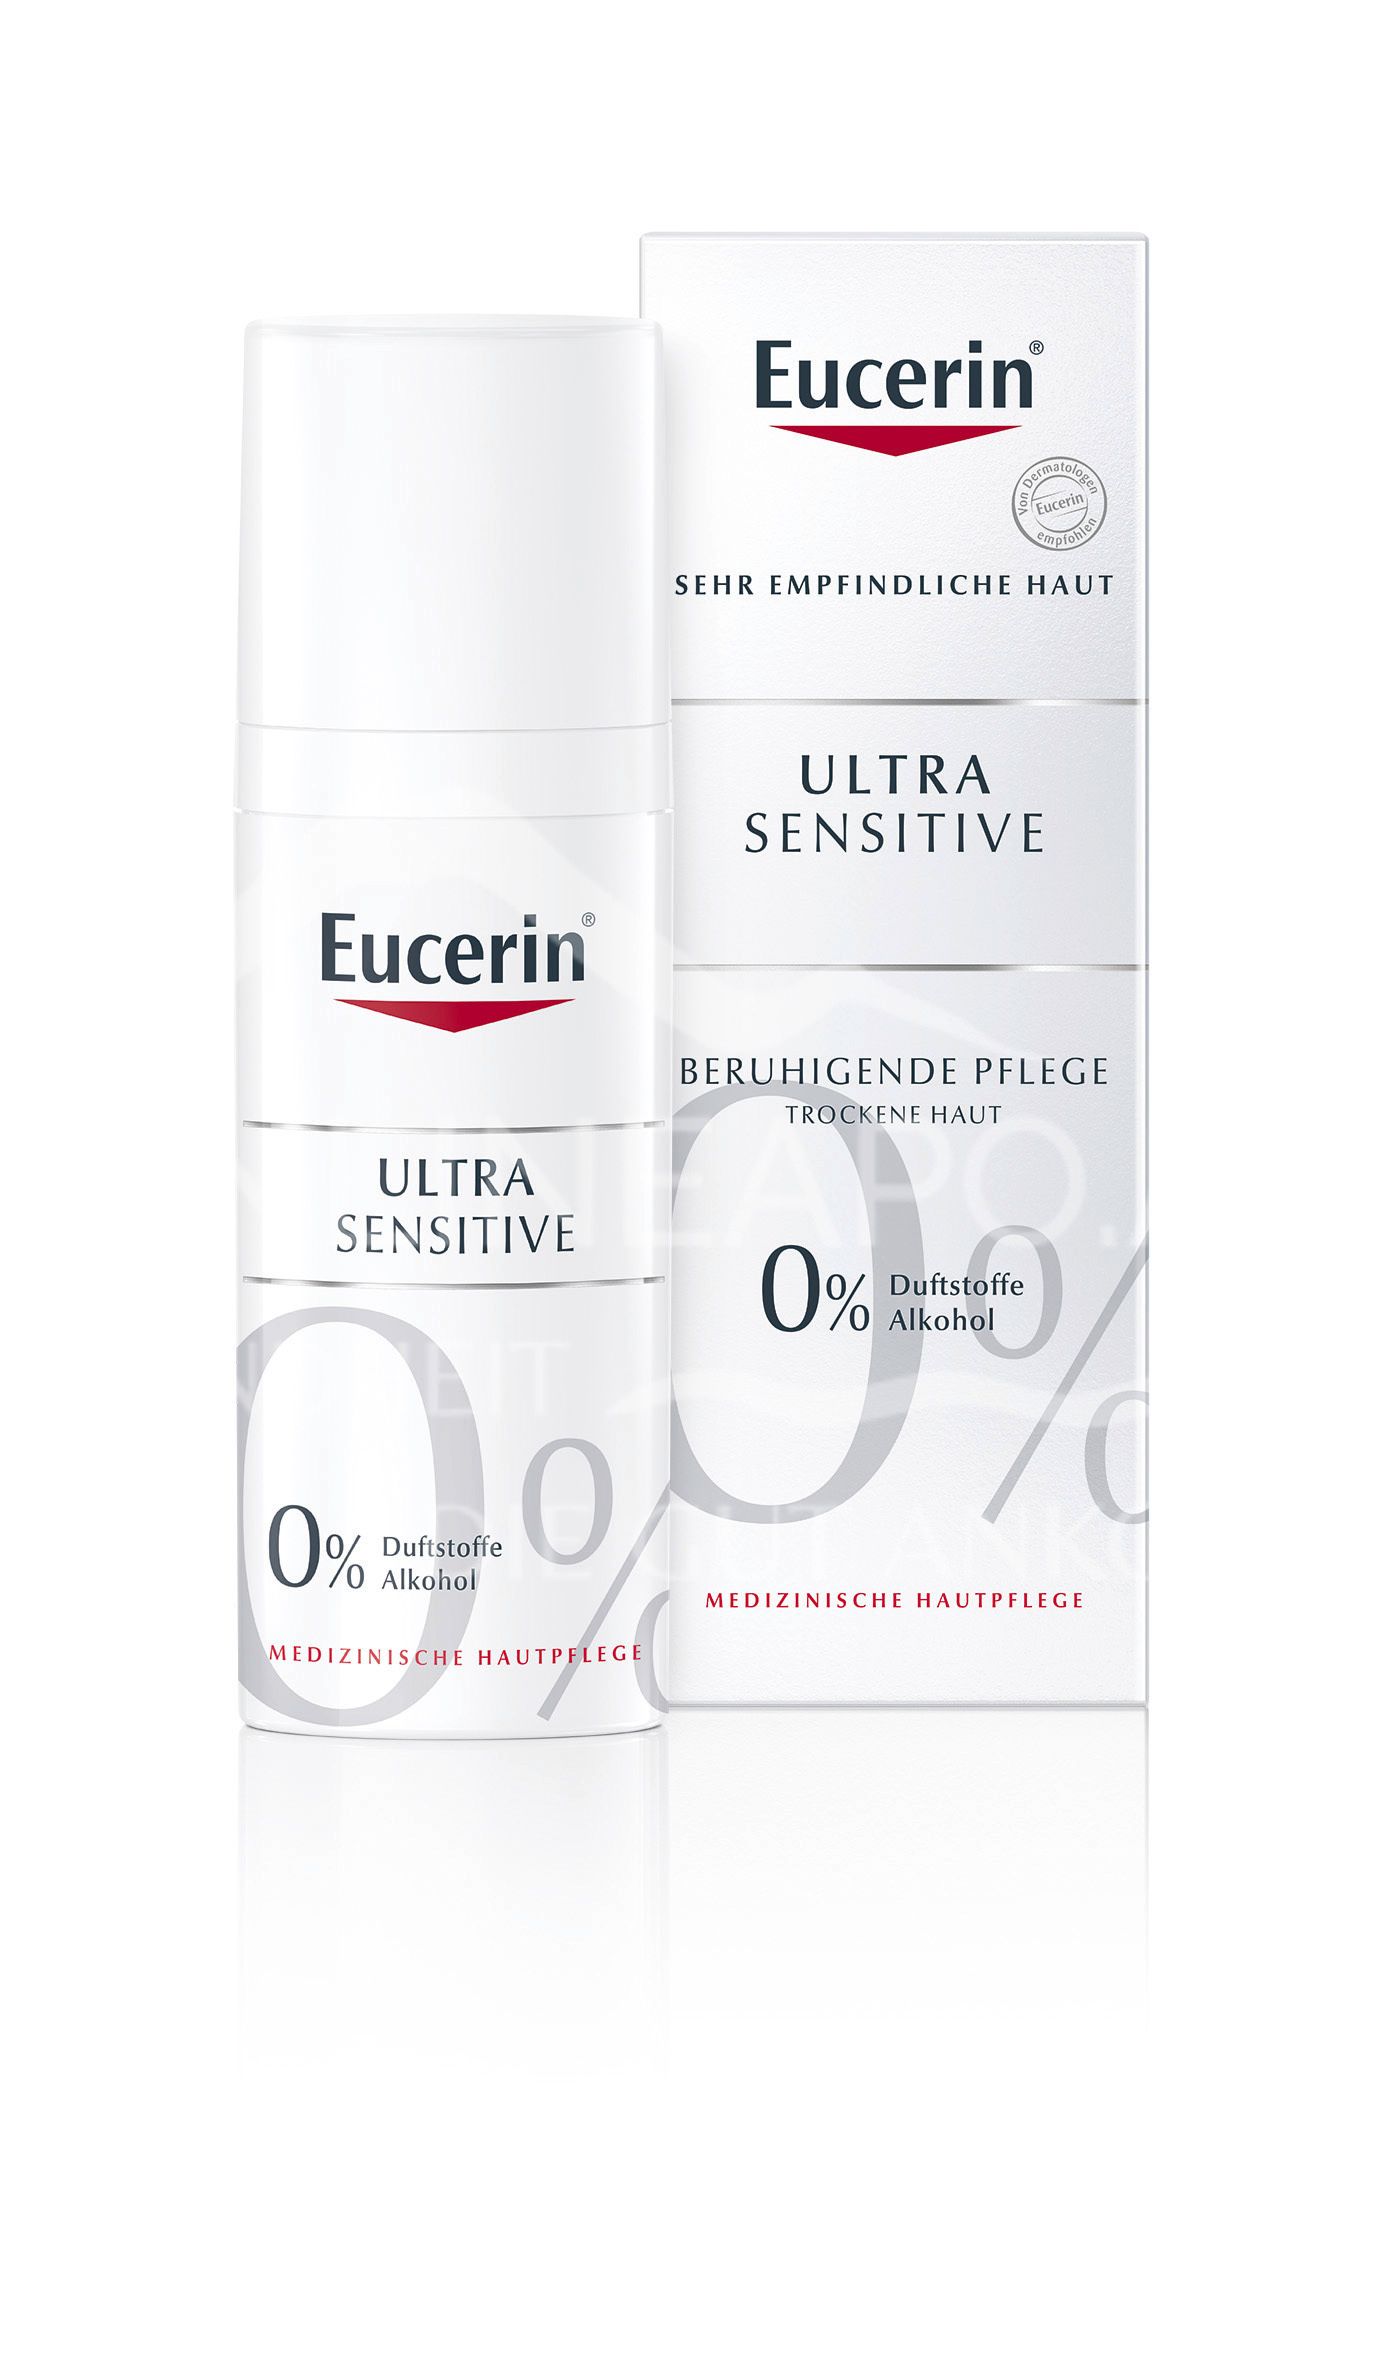 Eucerin® UltraSENSITIVE Beruhigende Pflege für Trockene Haut